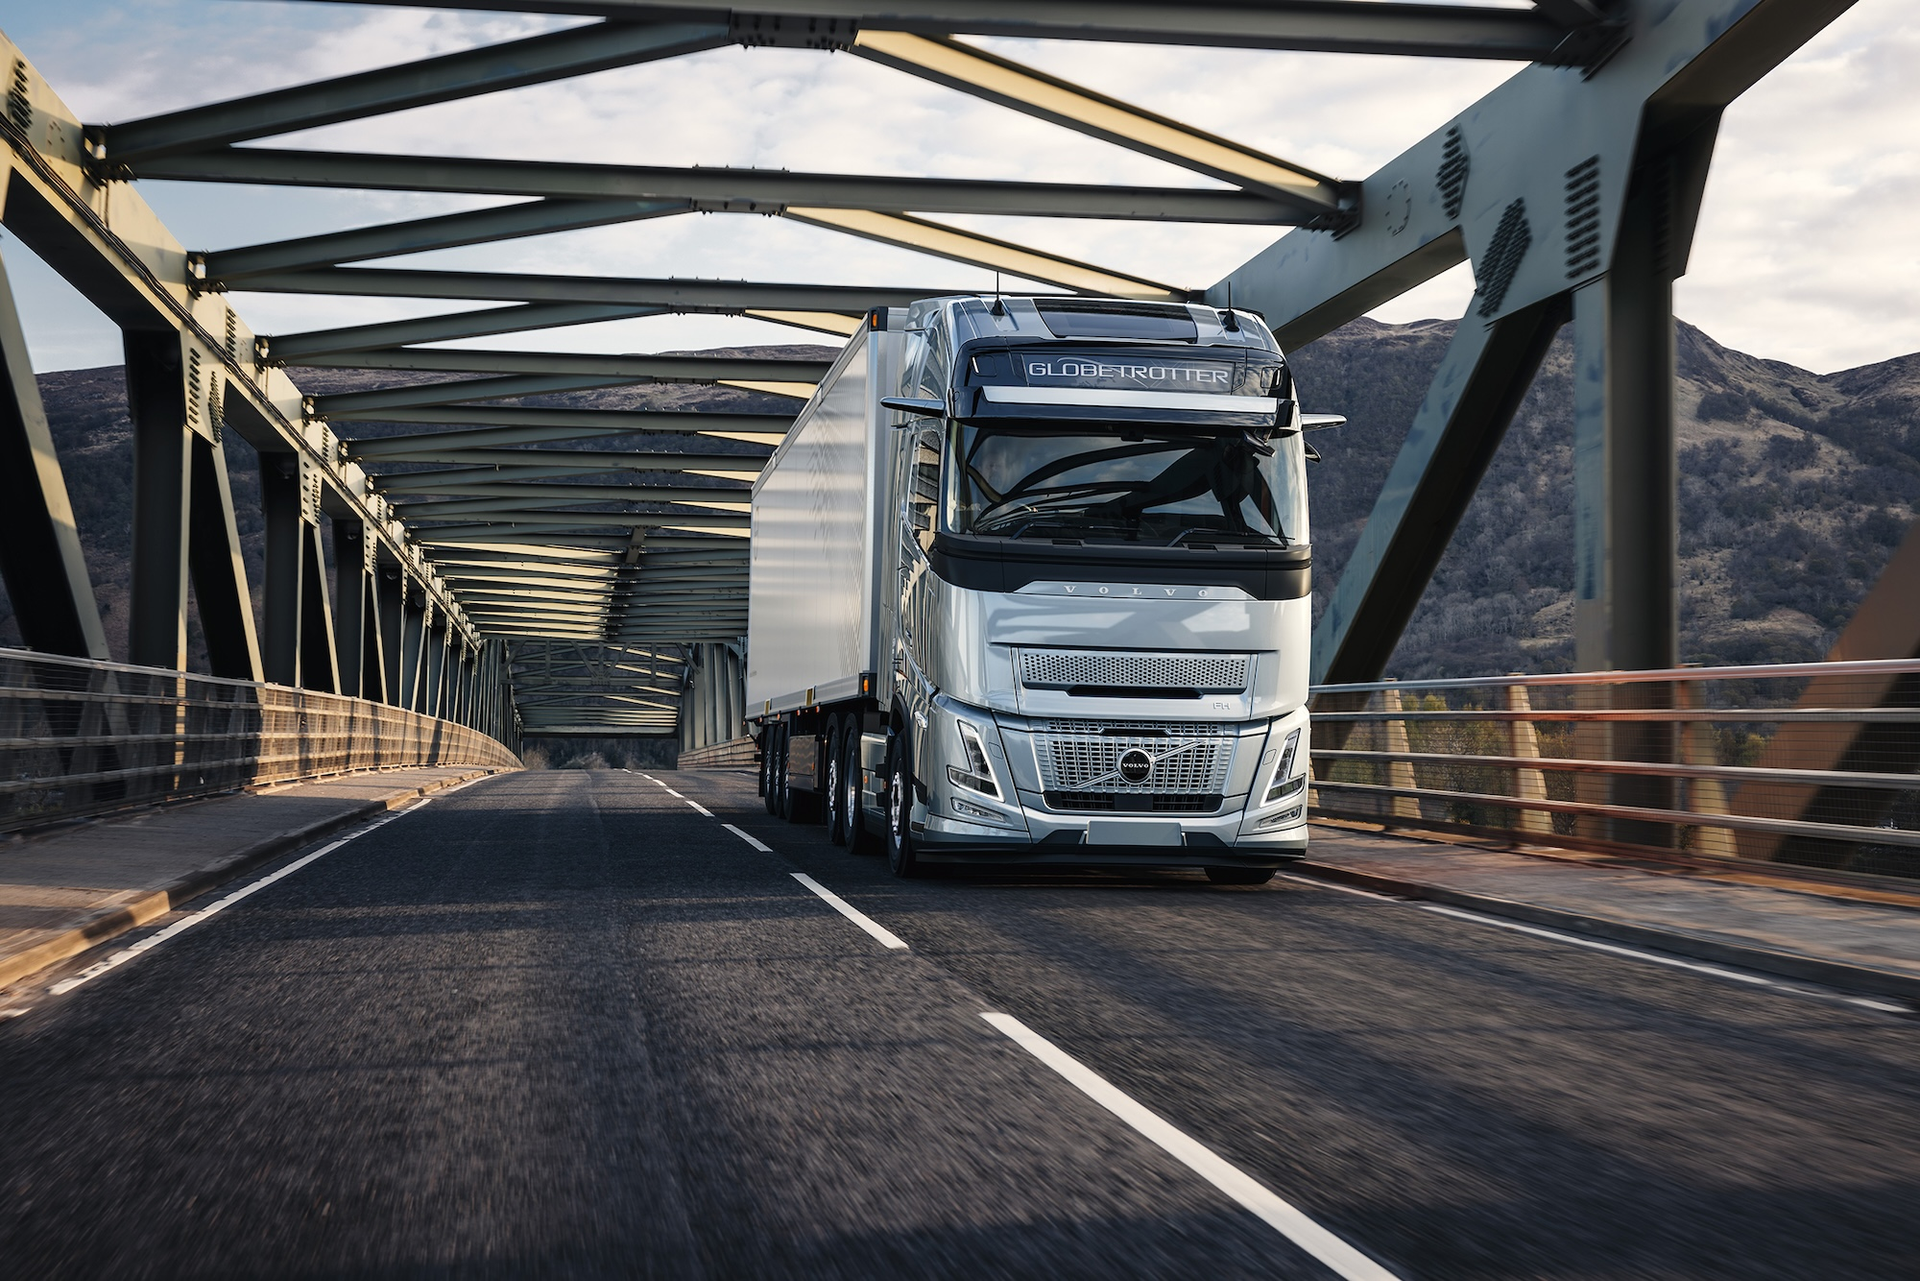 B&W Utilitaires SA Givisiez - Agent Renault Trucks et concessionnaire Volvo Trucks